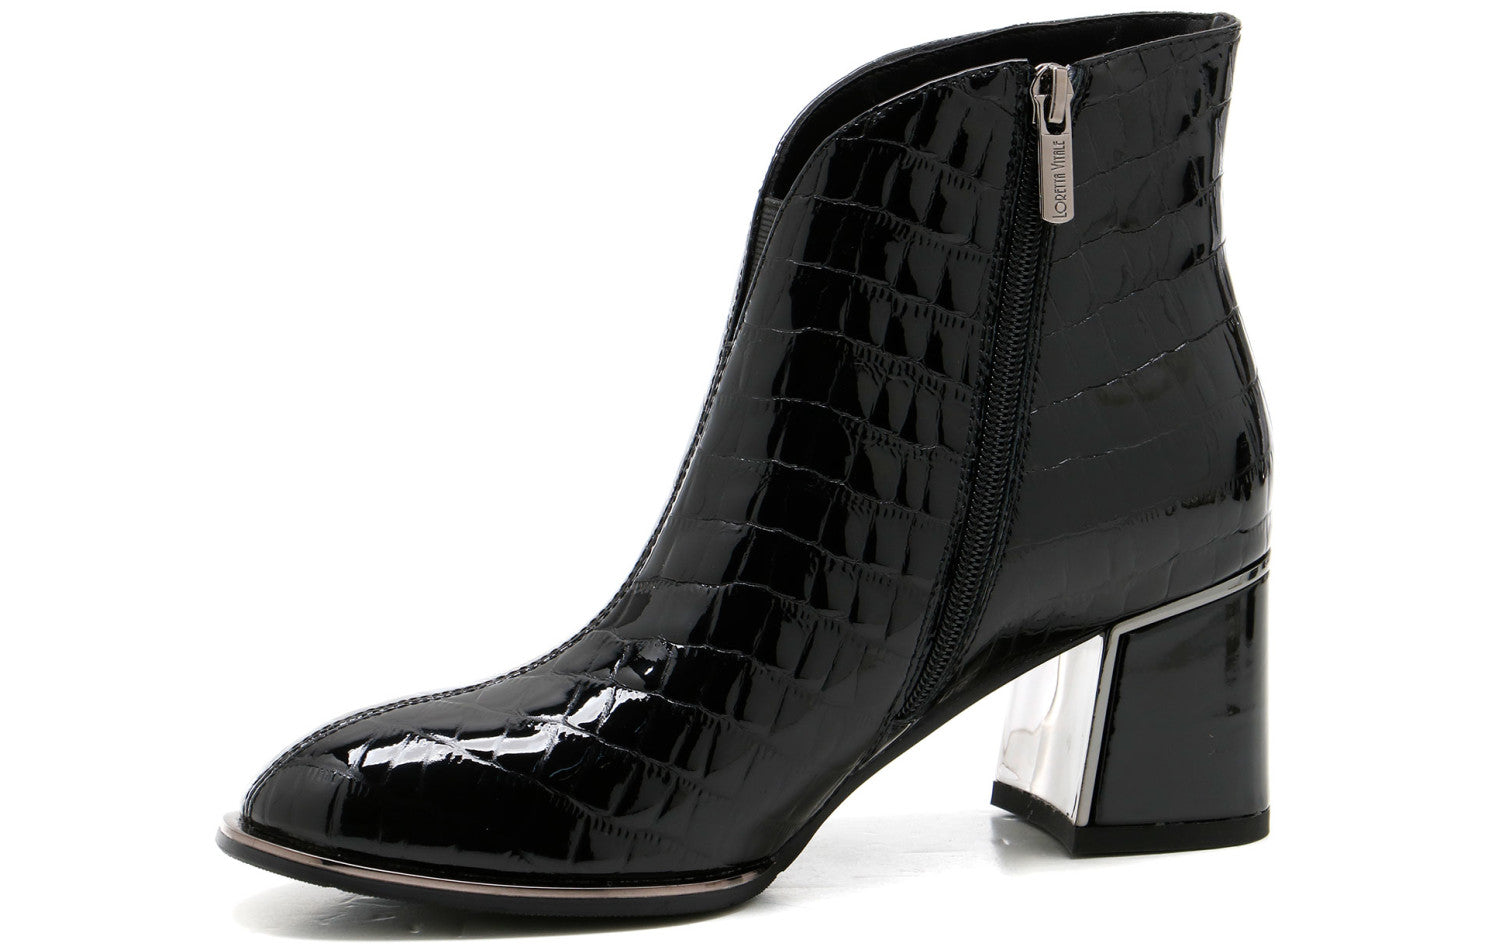 LORETTA VITALE Croc Print Patent Leather Ankle Boot Black